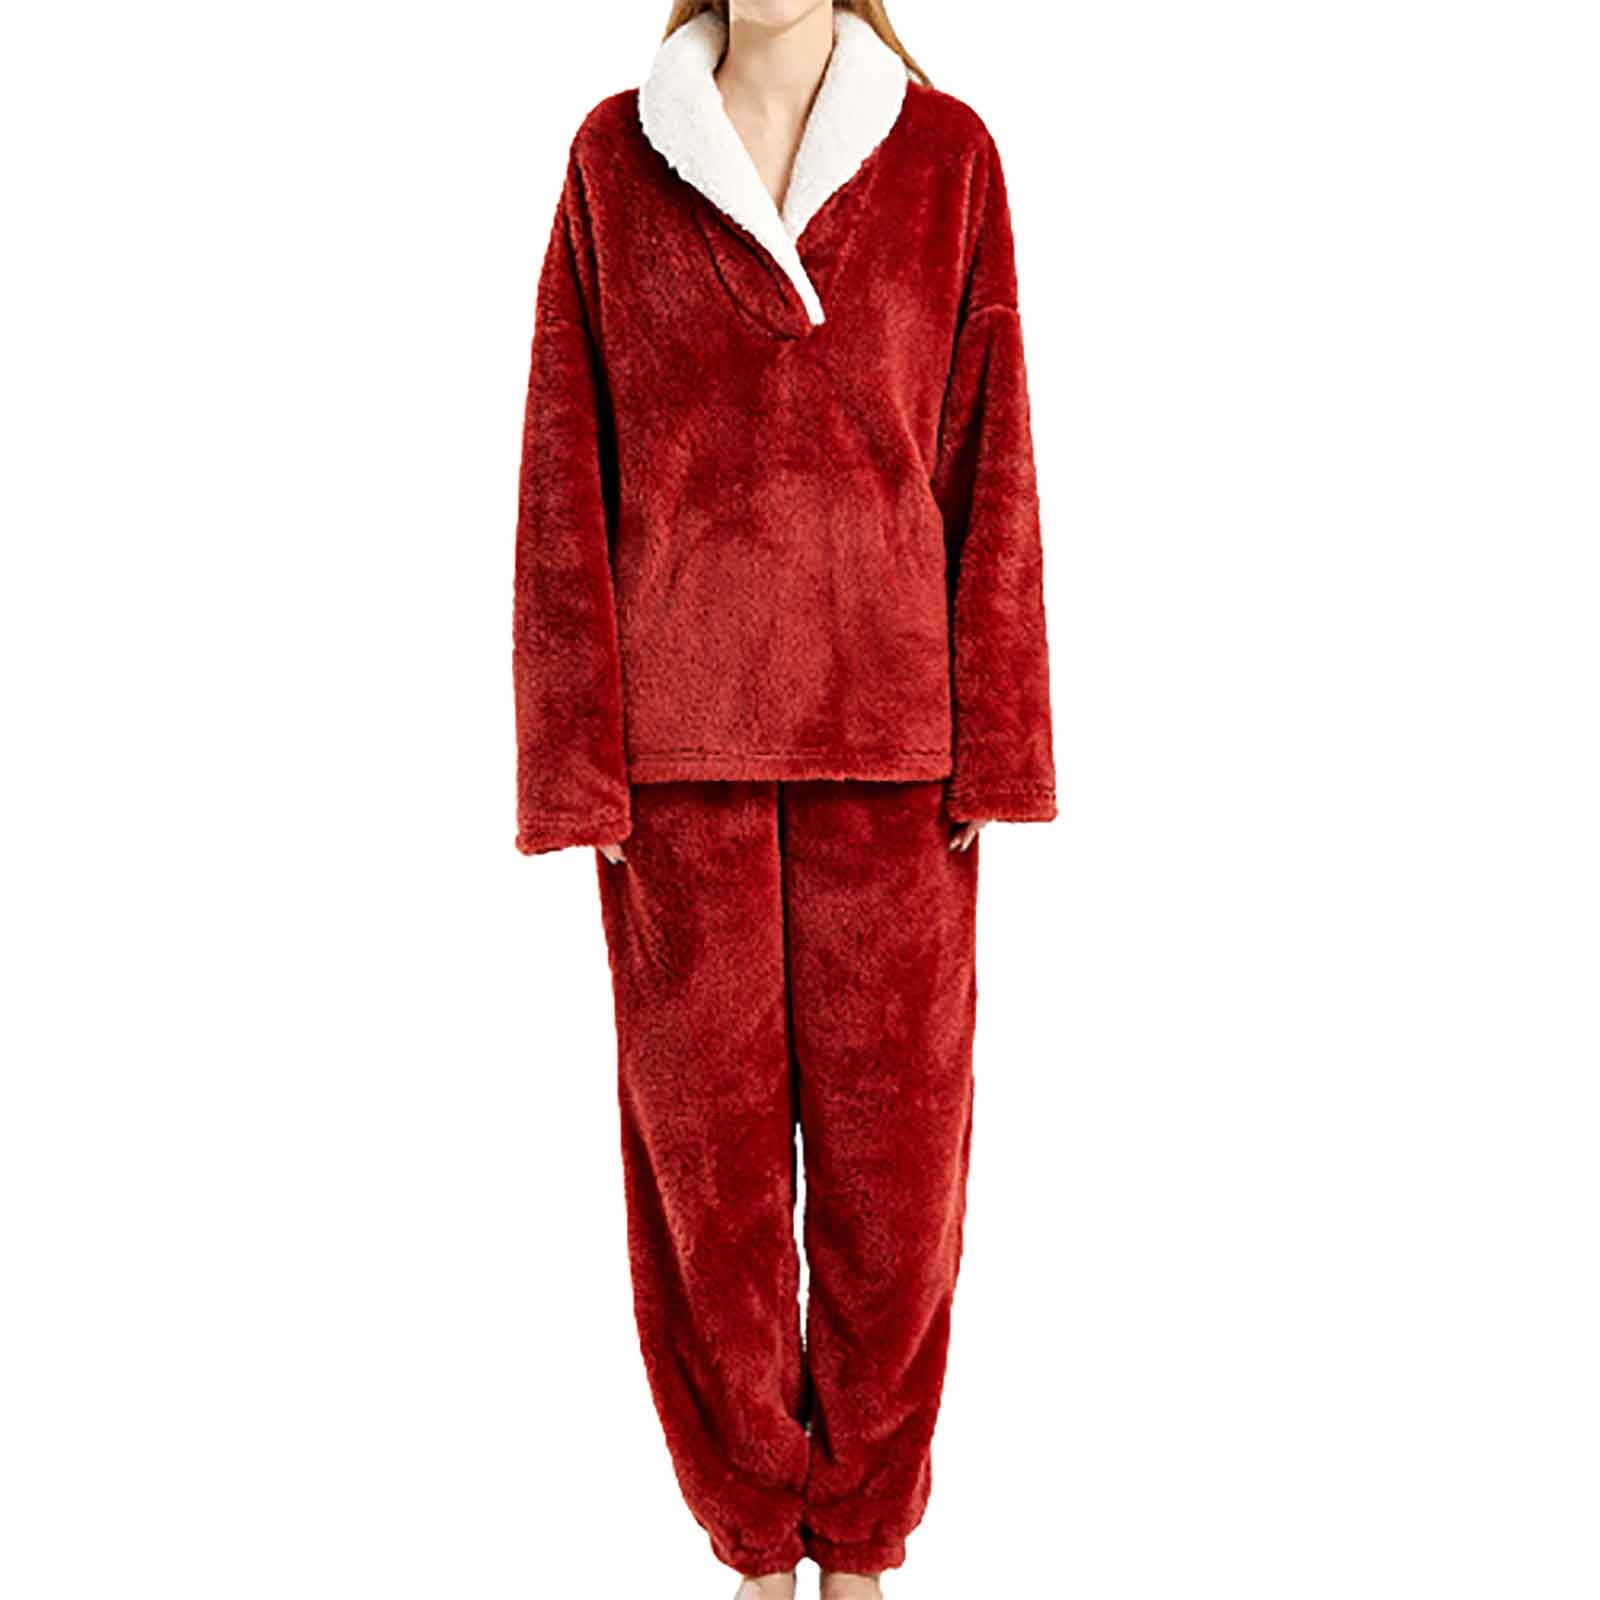 BiCophy Womens Fuzzy Pajamas Loung Terry Jogger Pajama Fluffy